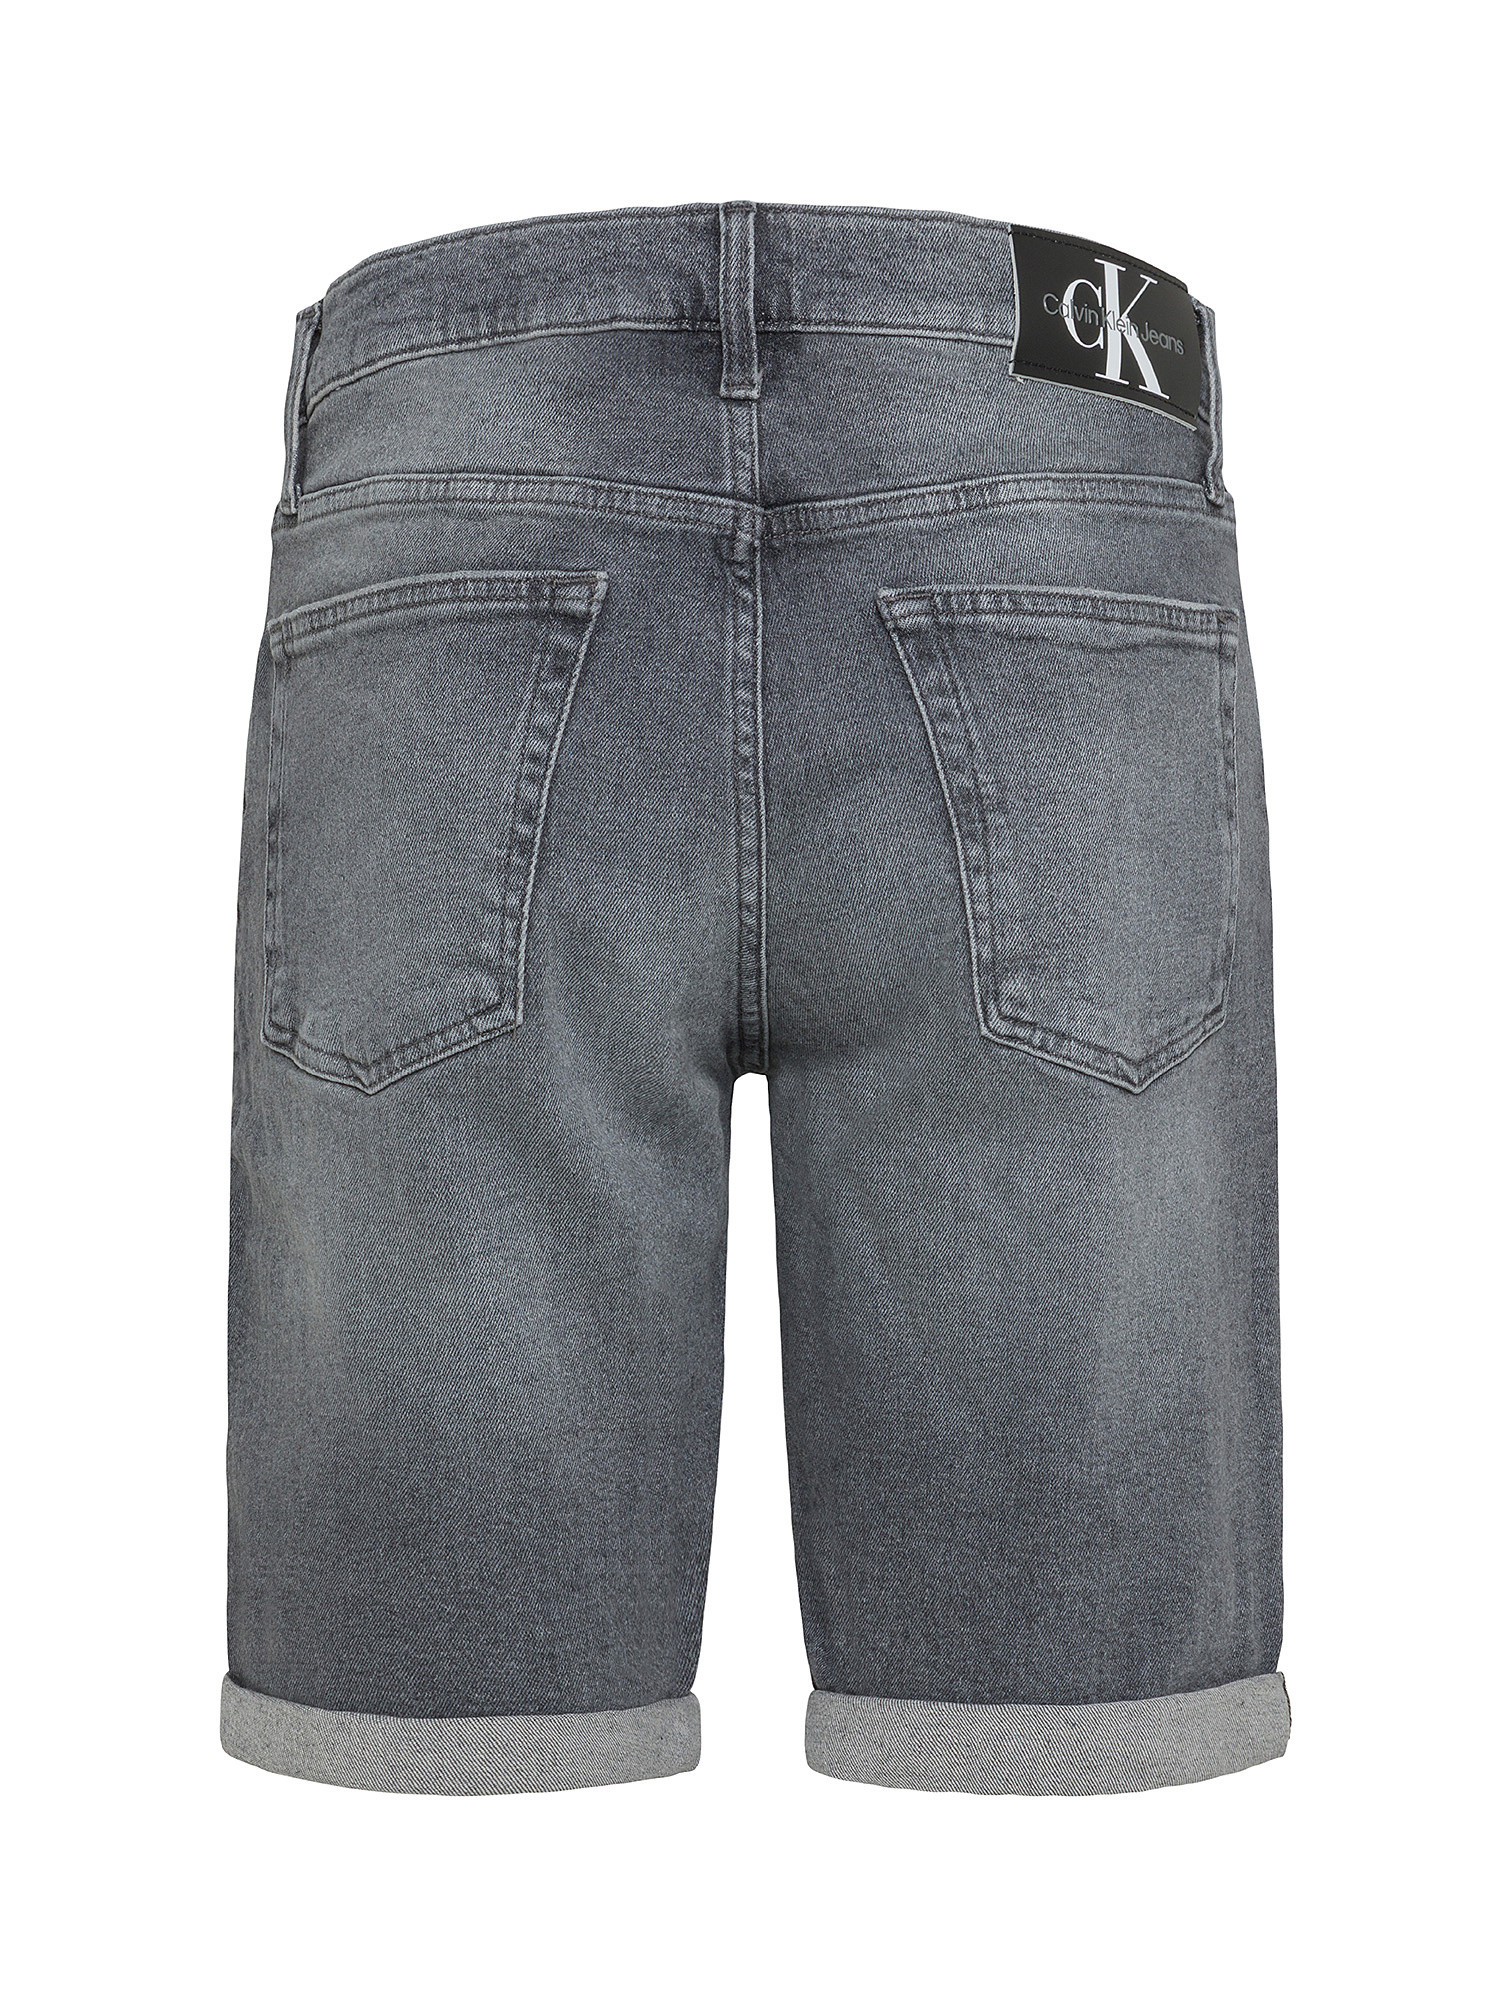 Calvin Klein Jeans -  Pantaloncini in jeans slim fit, Grigio, large image number 1